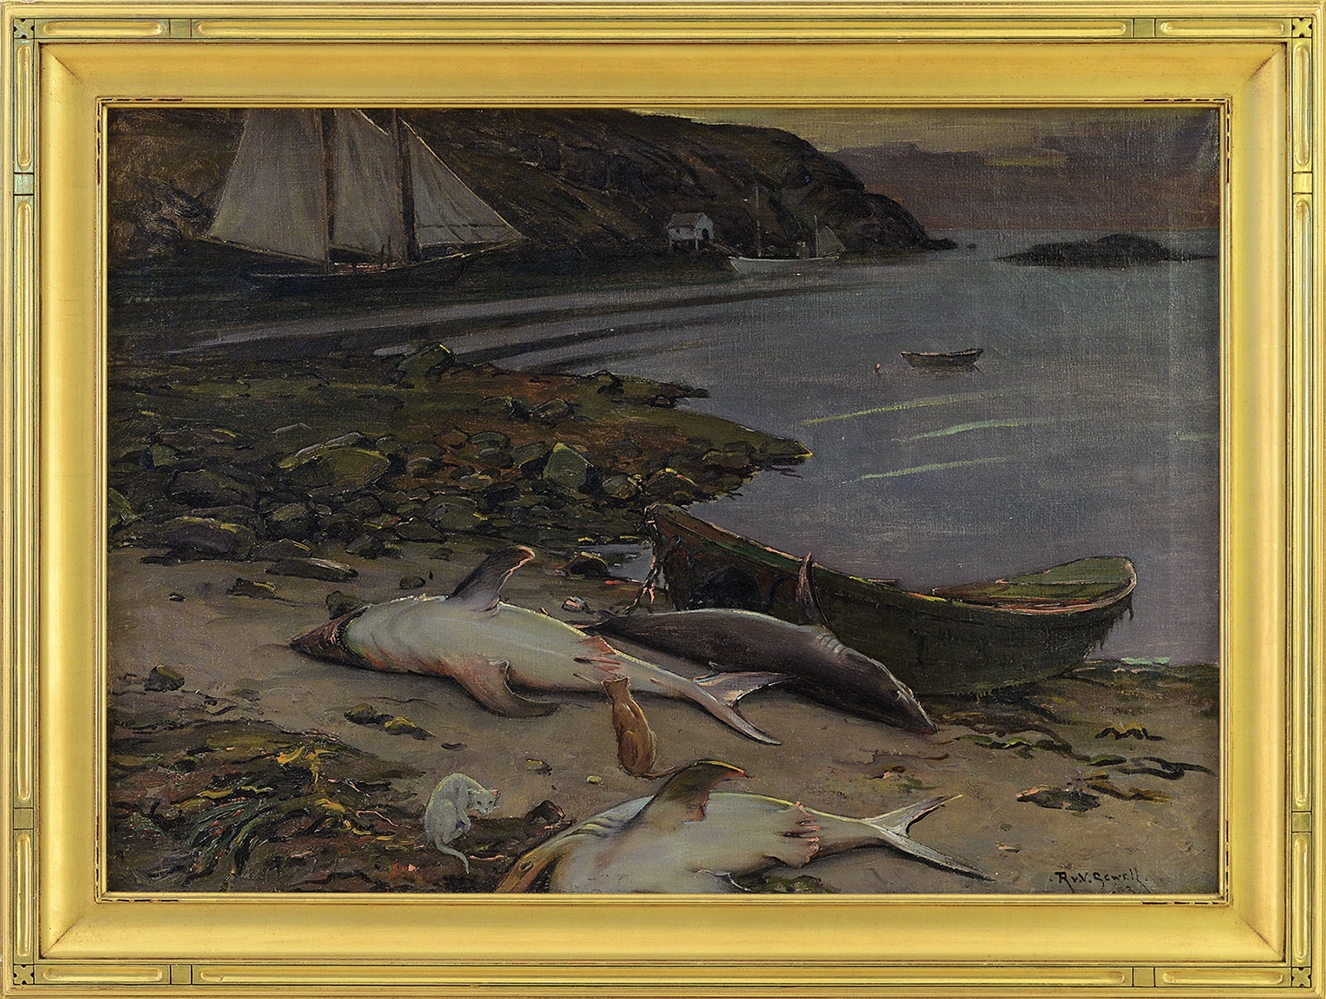 ROBERT SEWELL (AMERICAN, 1860-1924) "THE SCAVENGERS, FISH BEACH, MONHEGAN"                                                                                                                              